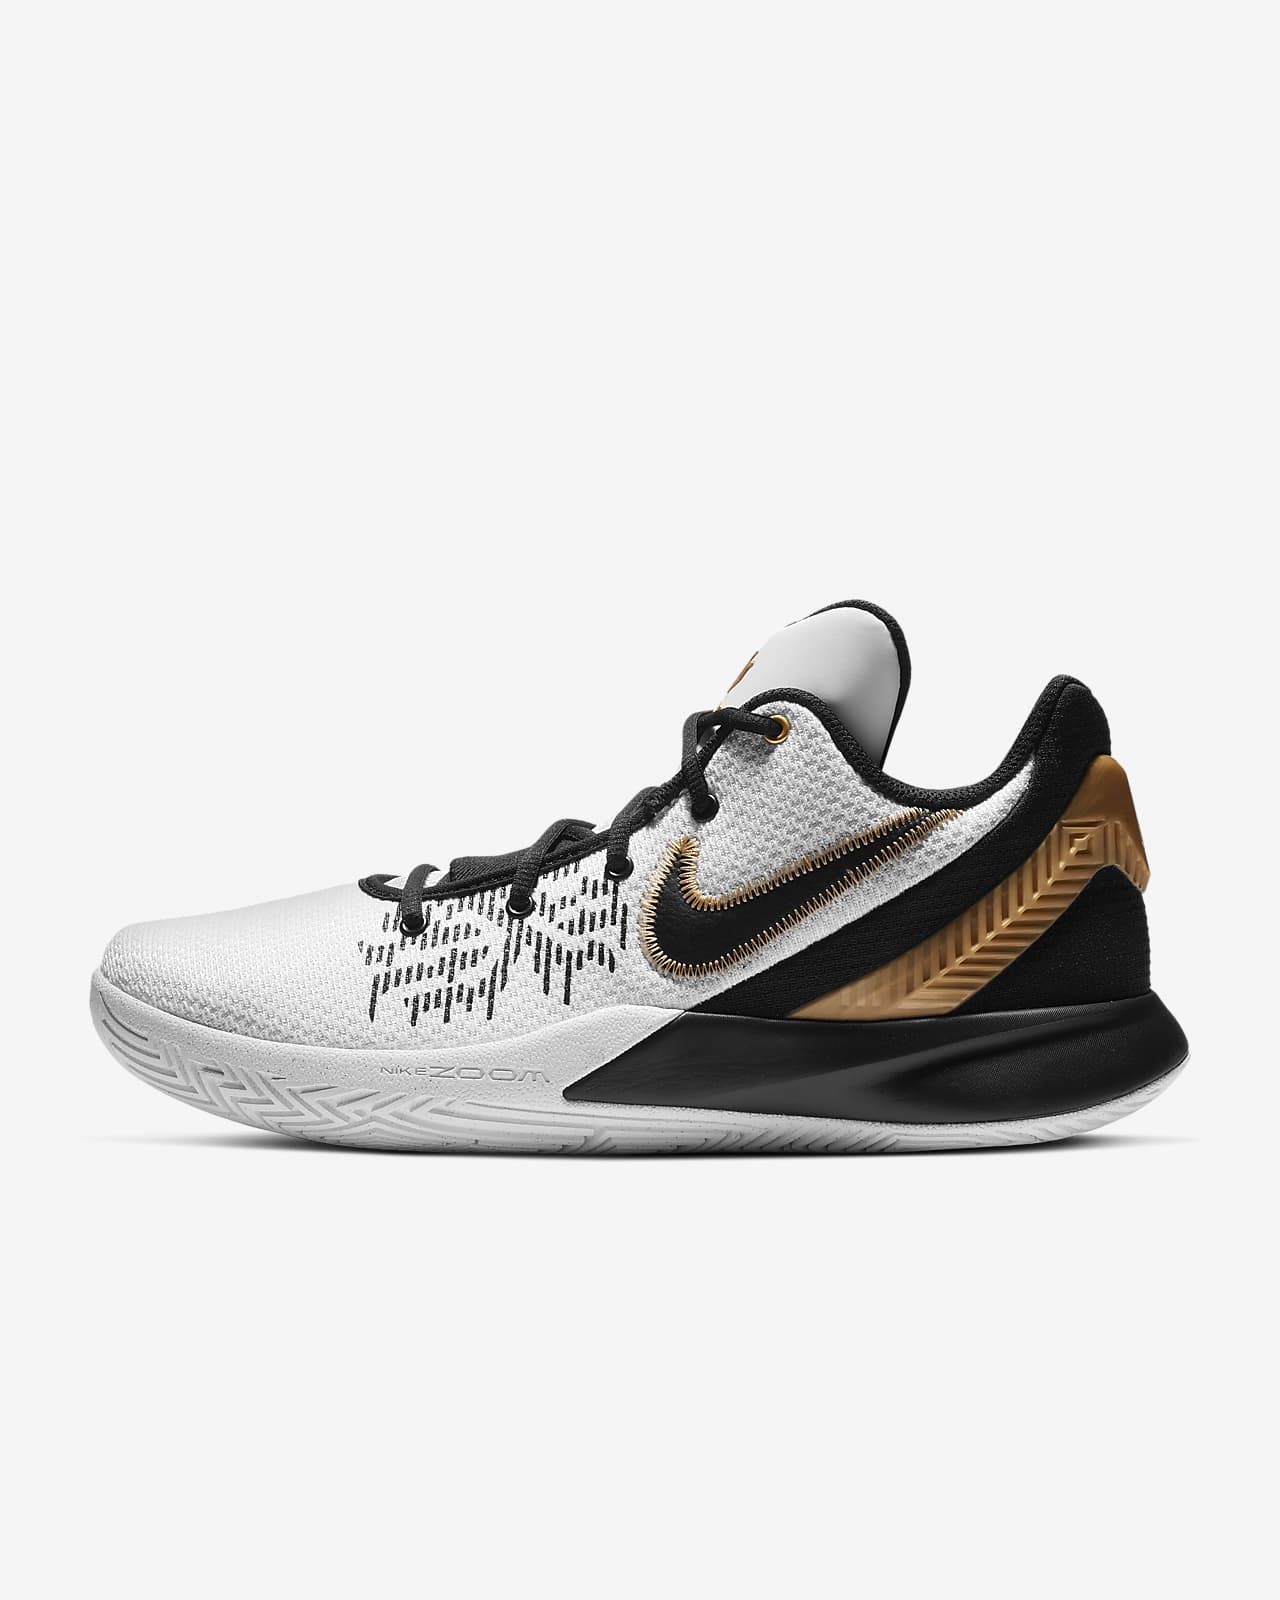 Kyrie Flytrap II Basketball Shoe. Nike PH